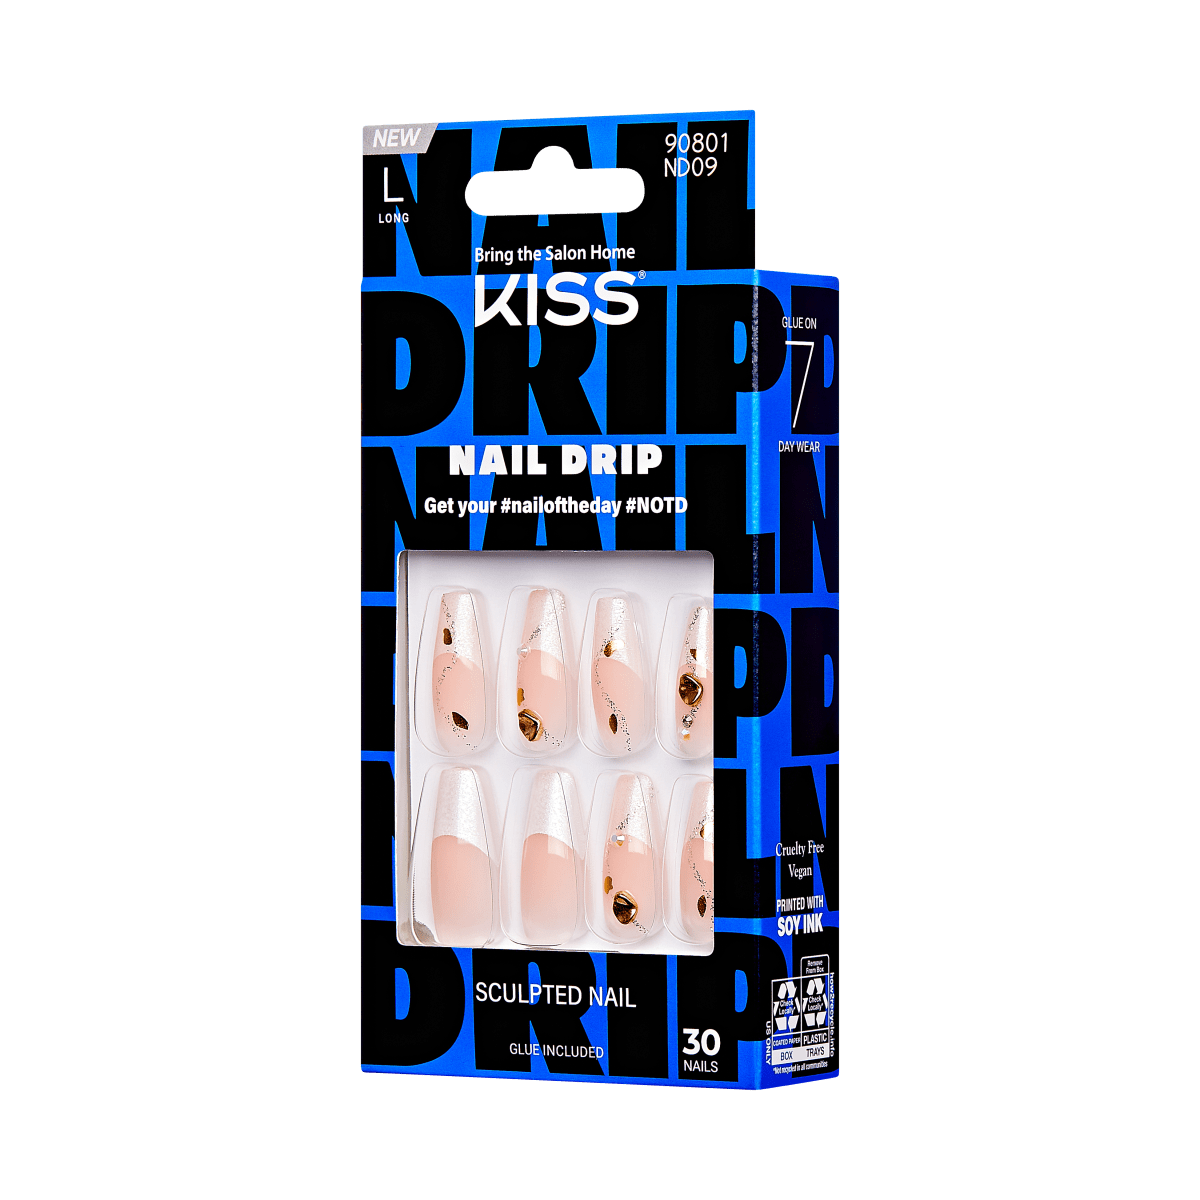 KISS Nail Drip - Light Drip